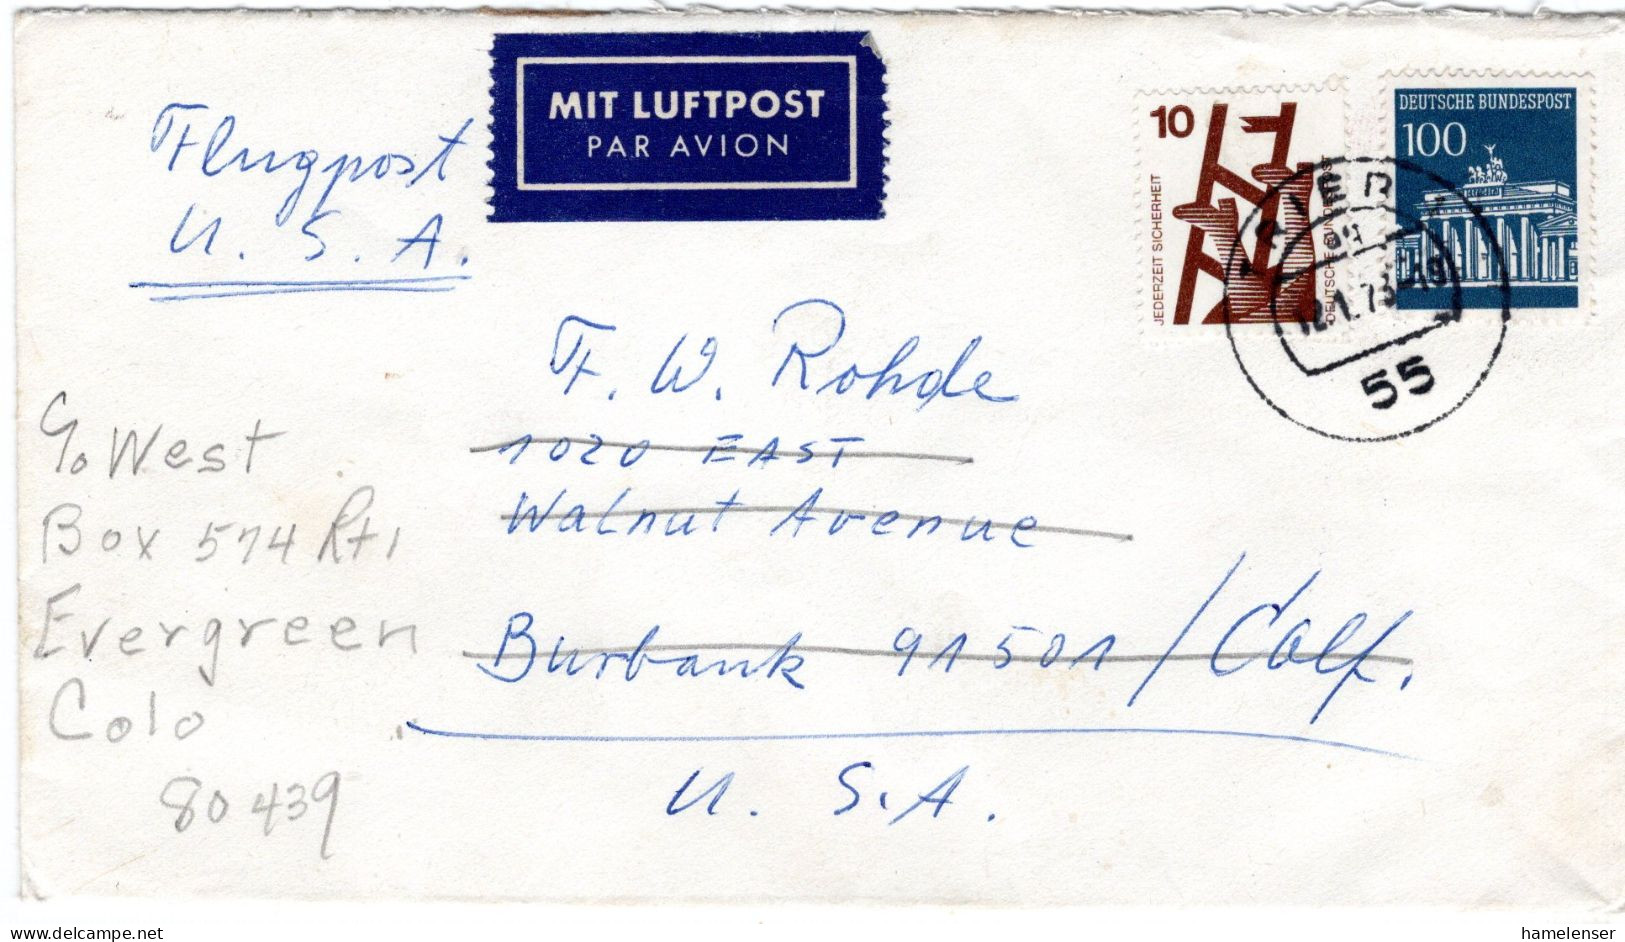 73946 - Bund - 1973 - 100Pfg Brandenburger Tor MiF A LpBf TRIER -> Burbank, CA (USA), Nachgesandt -> Evergreen, CO - Covers & Documents